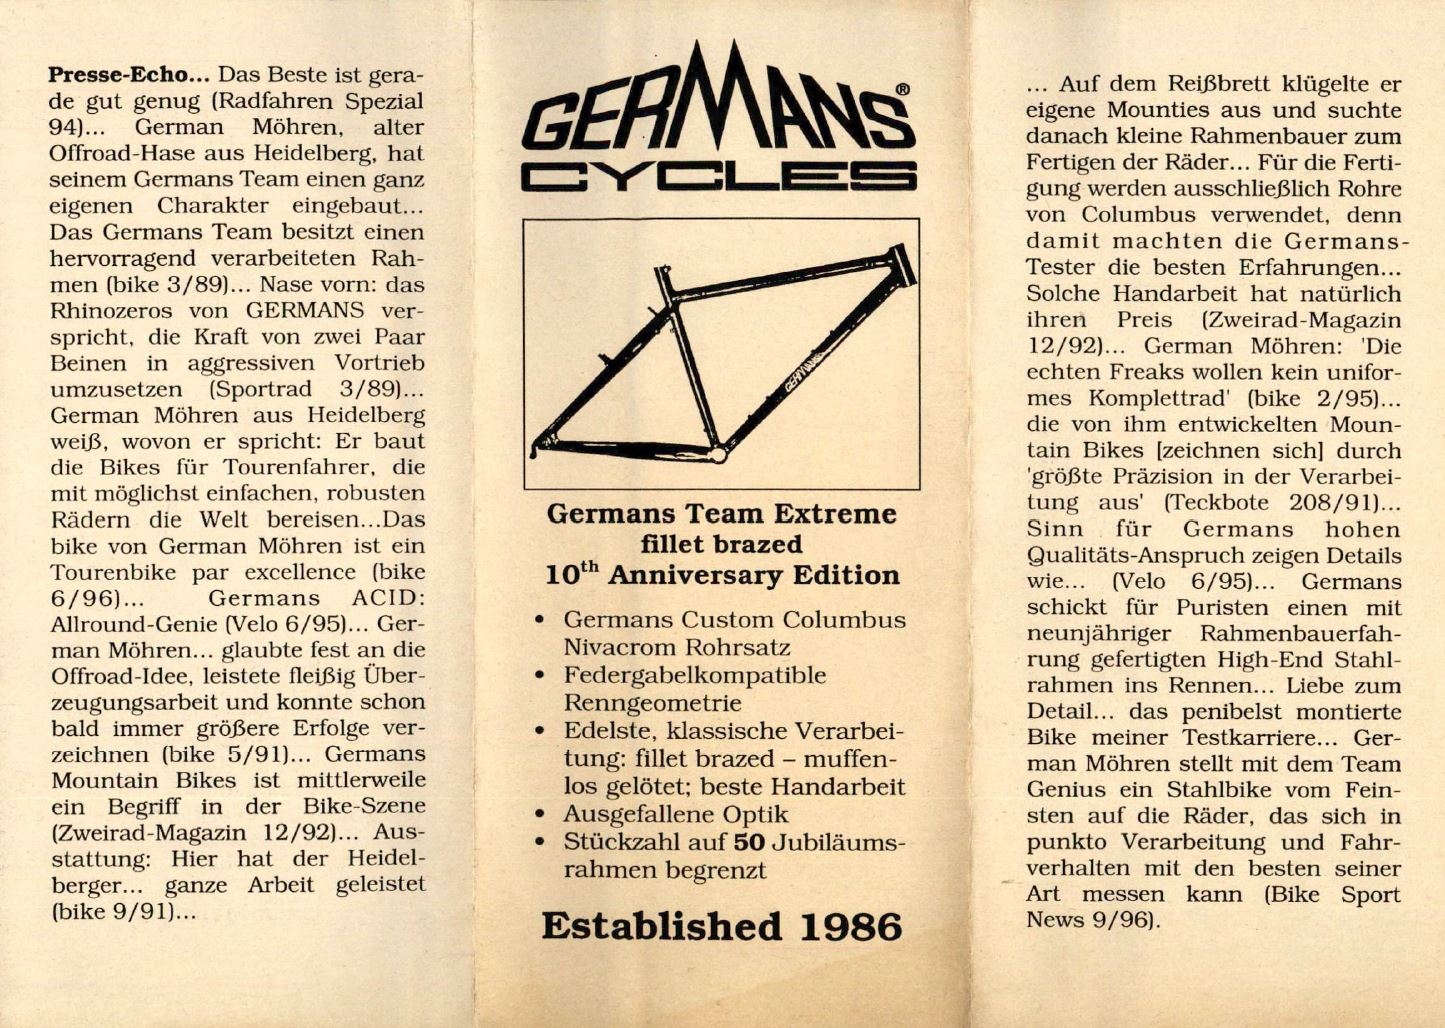 GERMANS_Flyer_1996.JPG